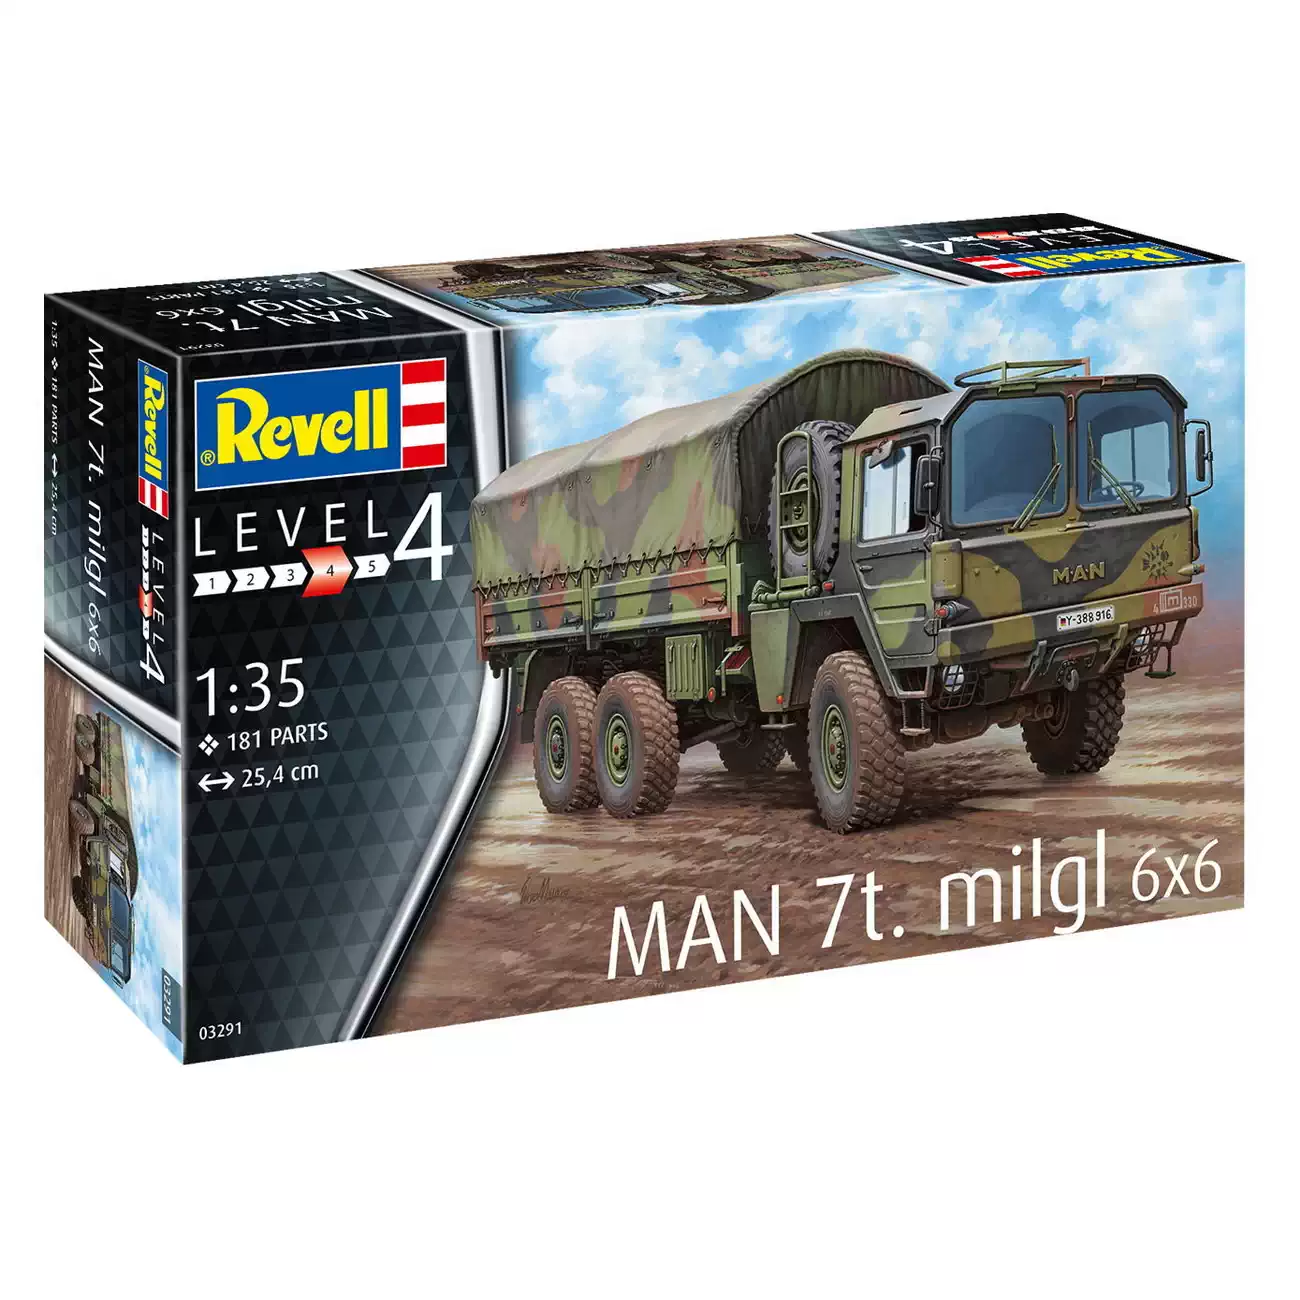 Revell 03291 -  MAN 7t milgl 6x6 - Modellbau